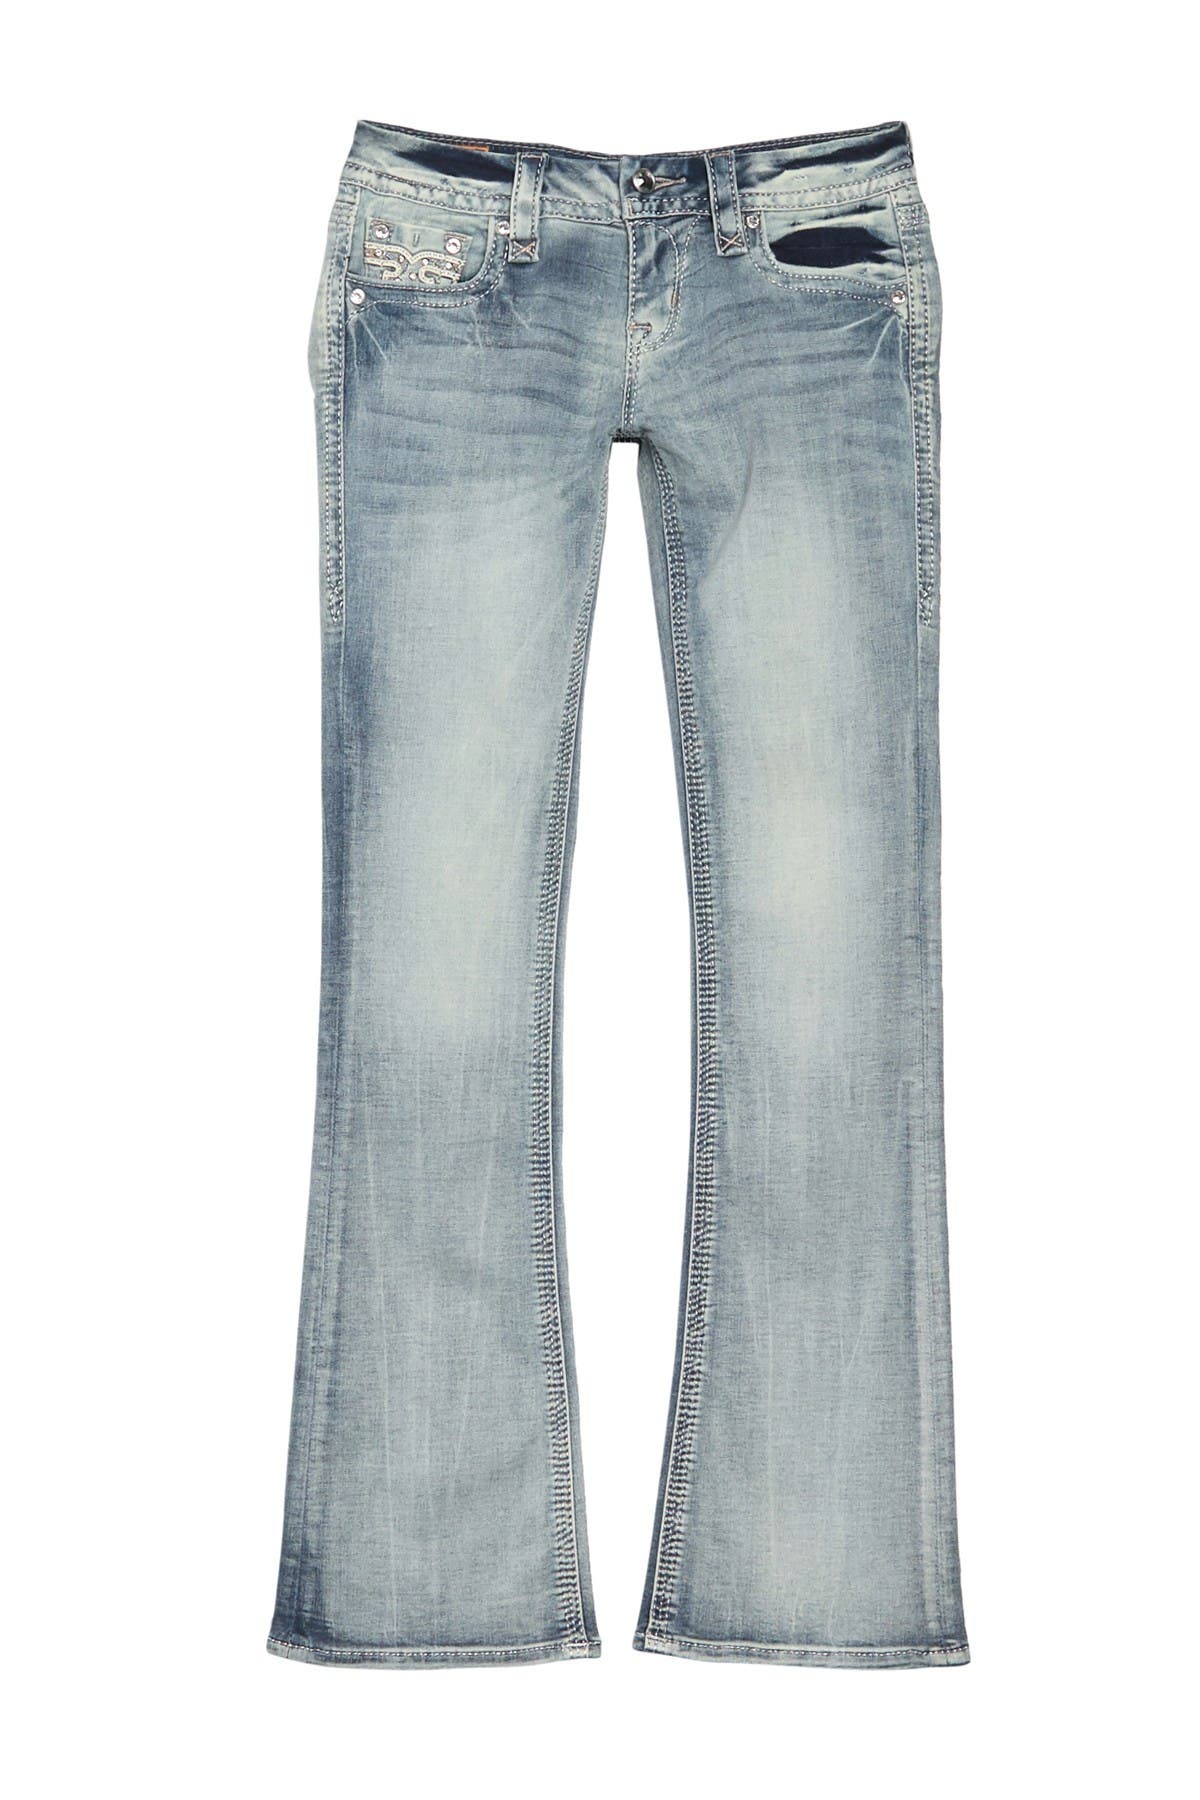 grey rock revival jeans